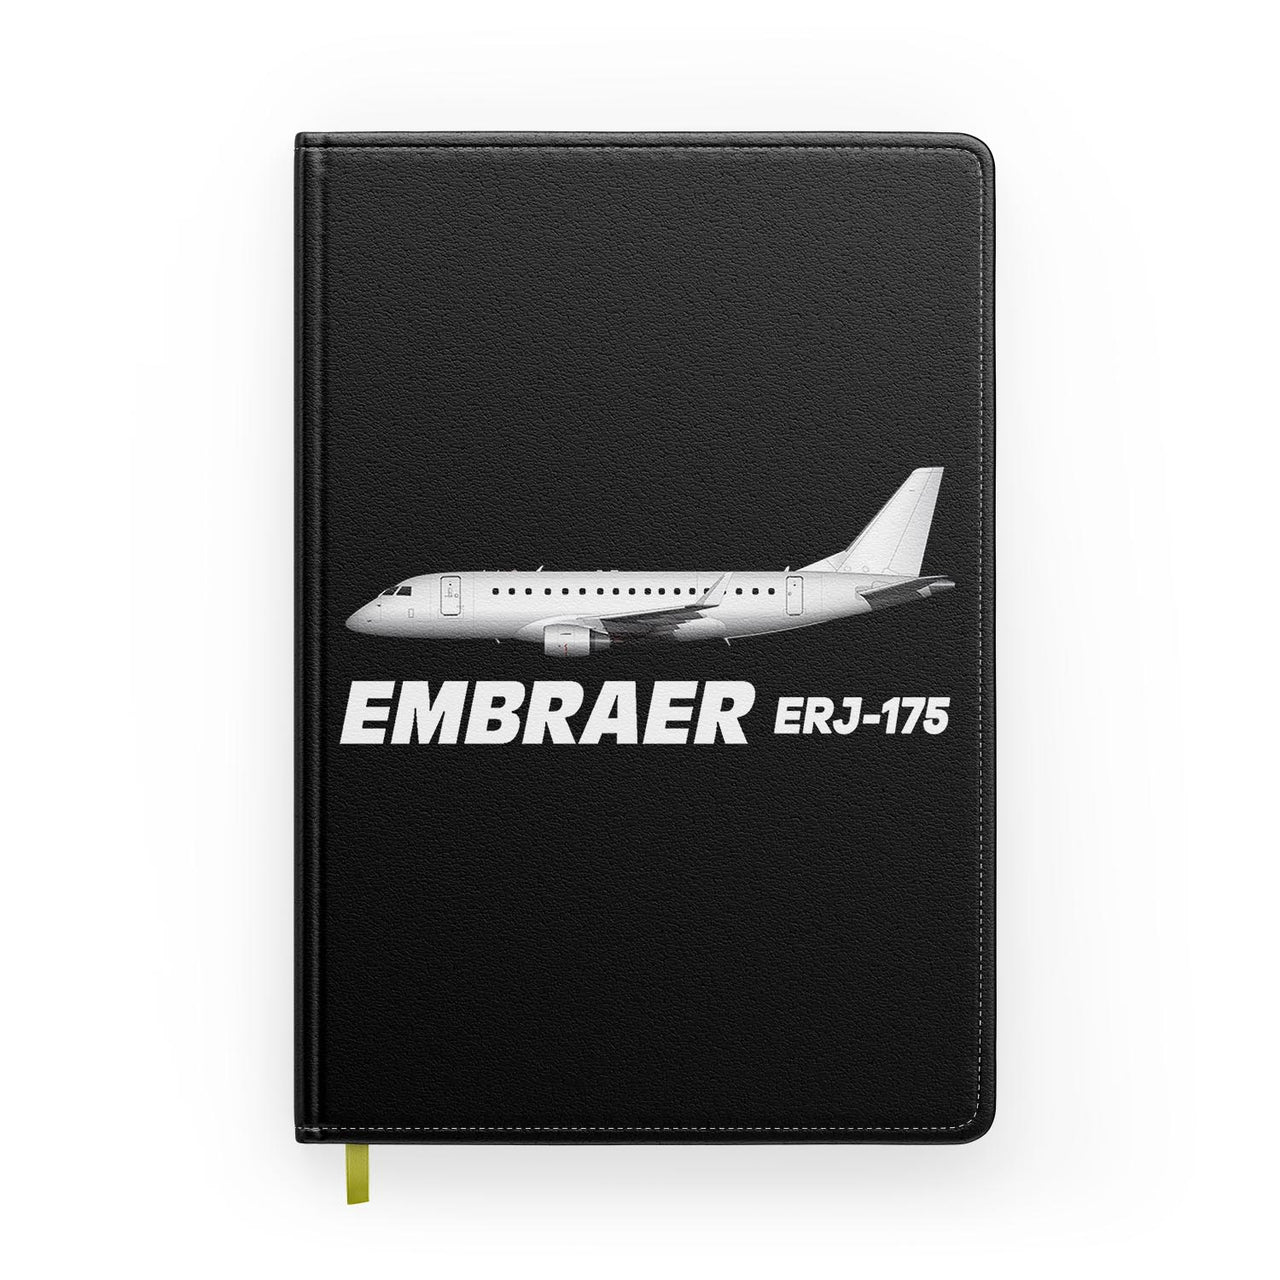 The Embraer ERJ-175 Designed Notebooks